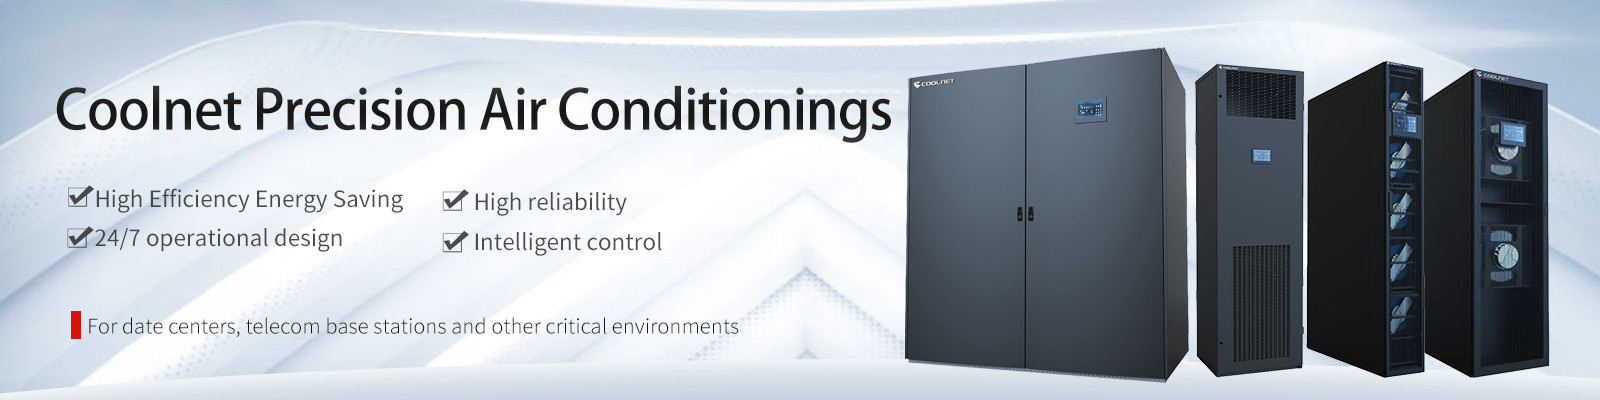 Precision Air Conditioning Units